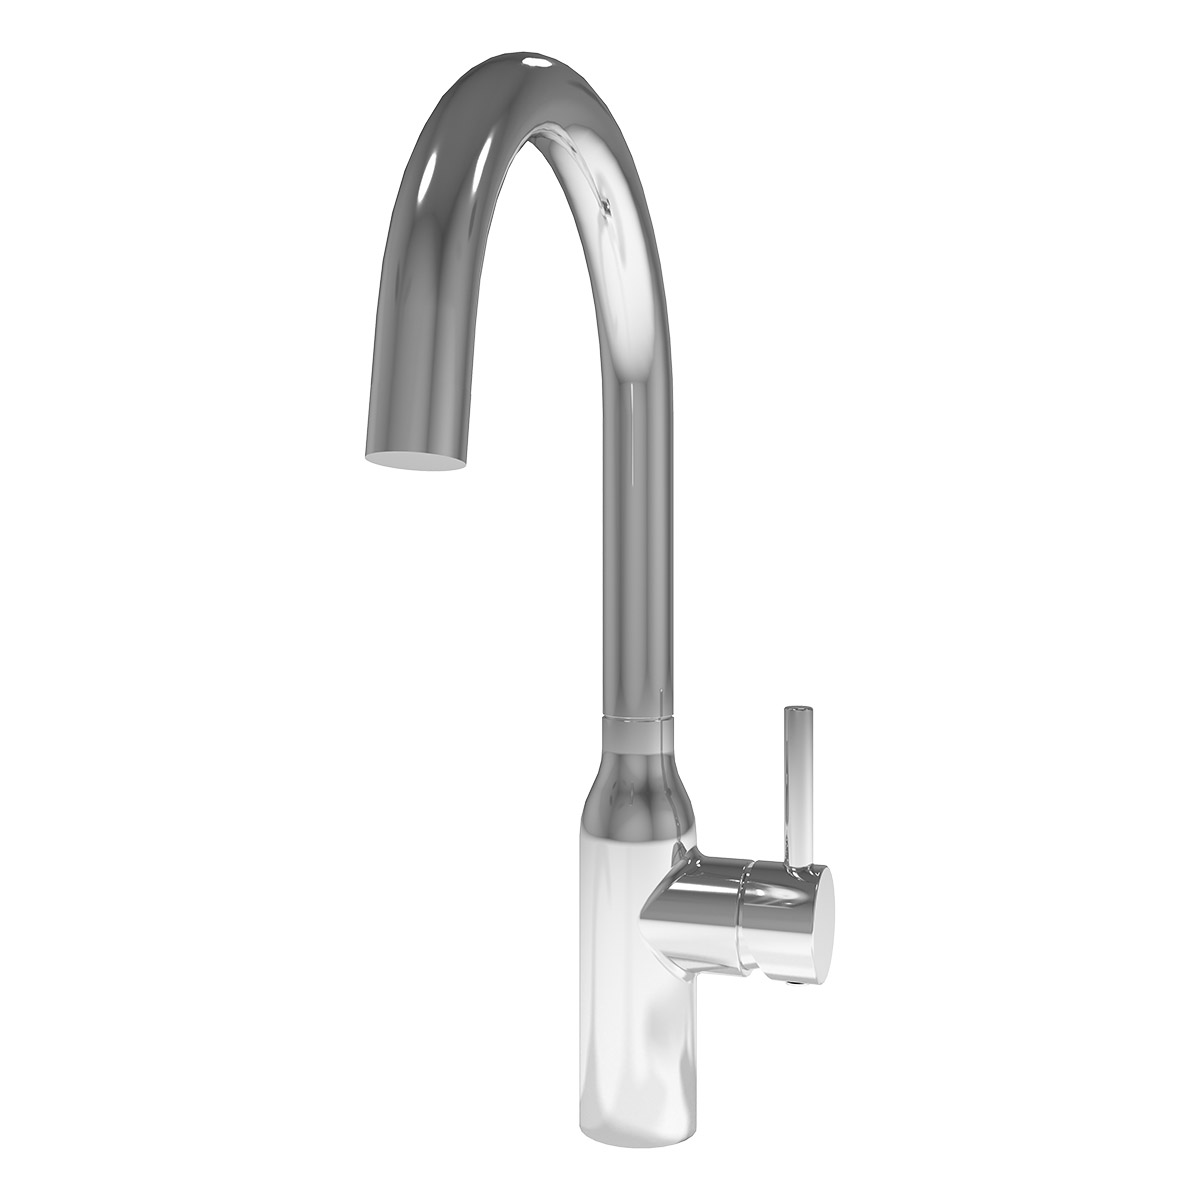 Eli single lever kitchen tap in chrome